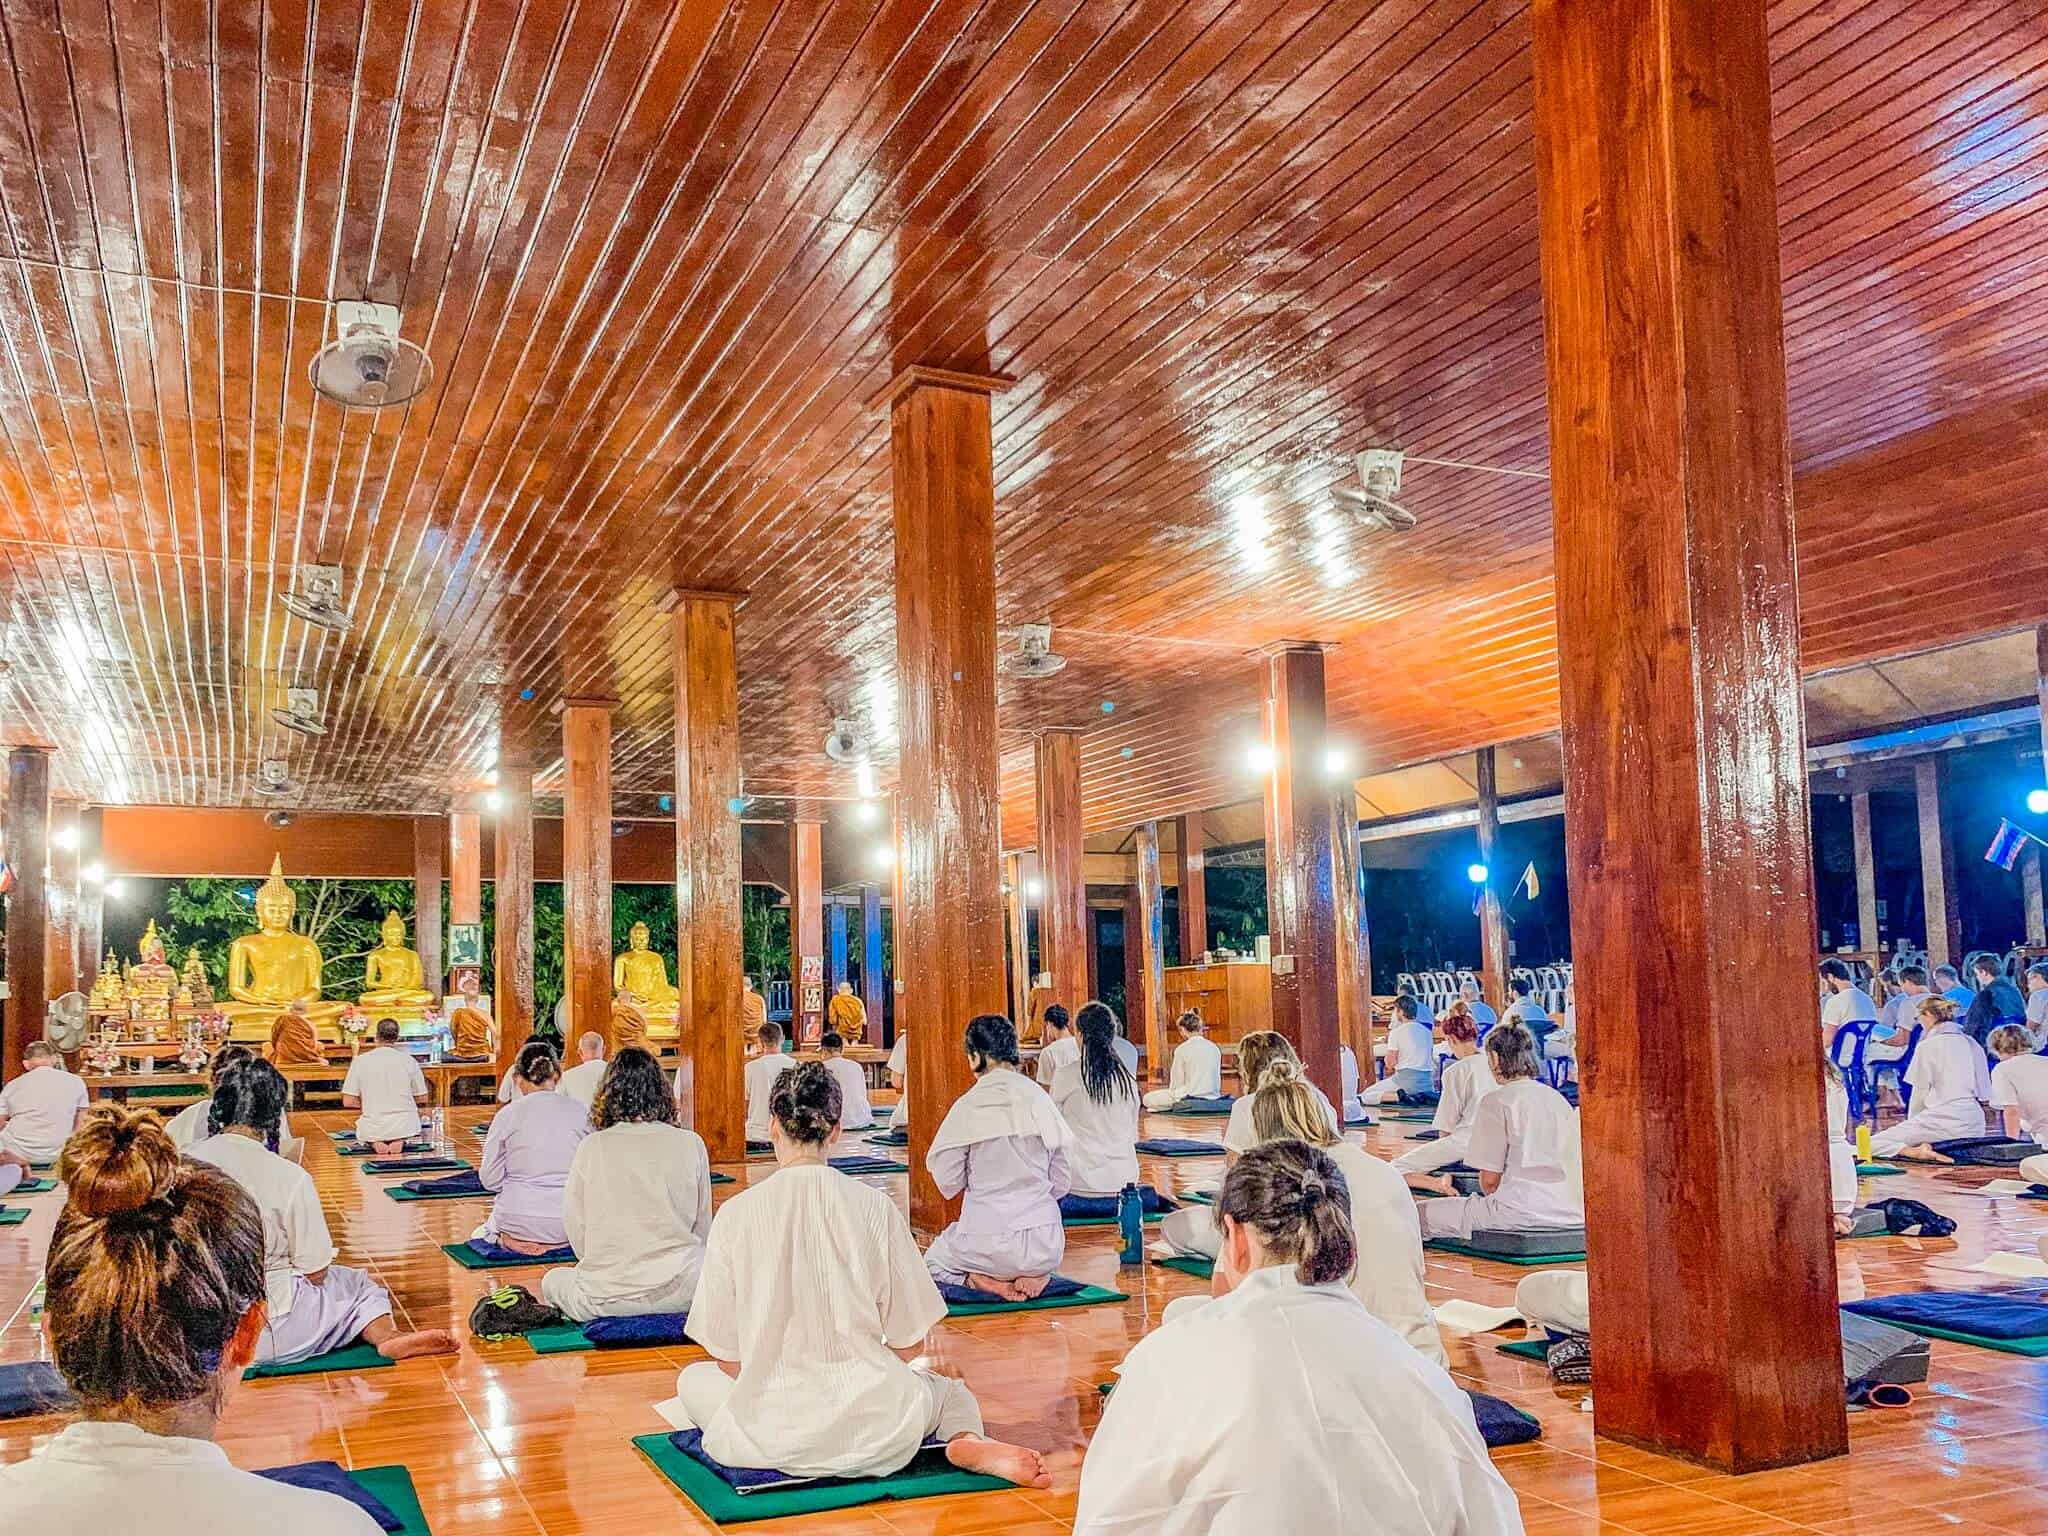 Sitting Meditation im Wat Pa Tam Wua Forest Monastery